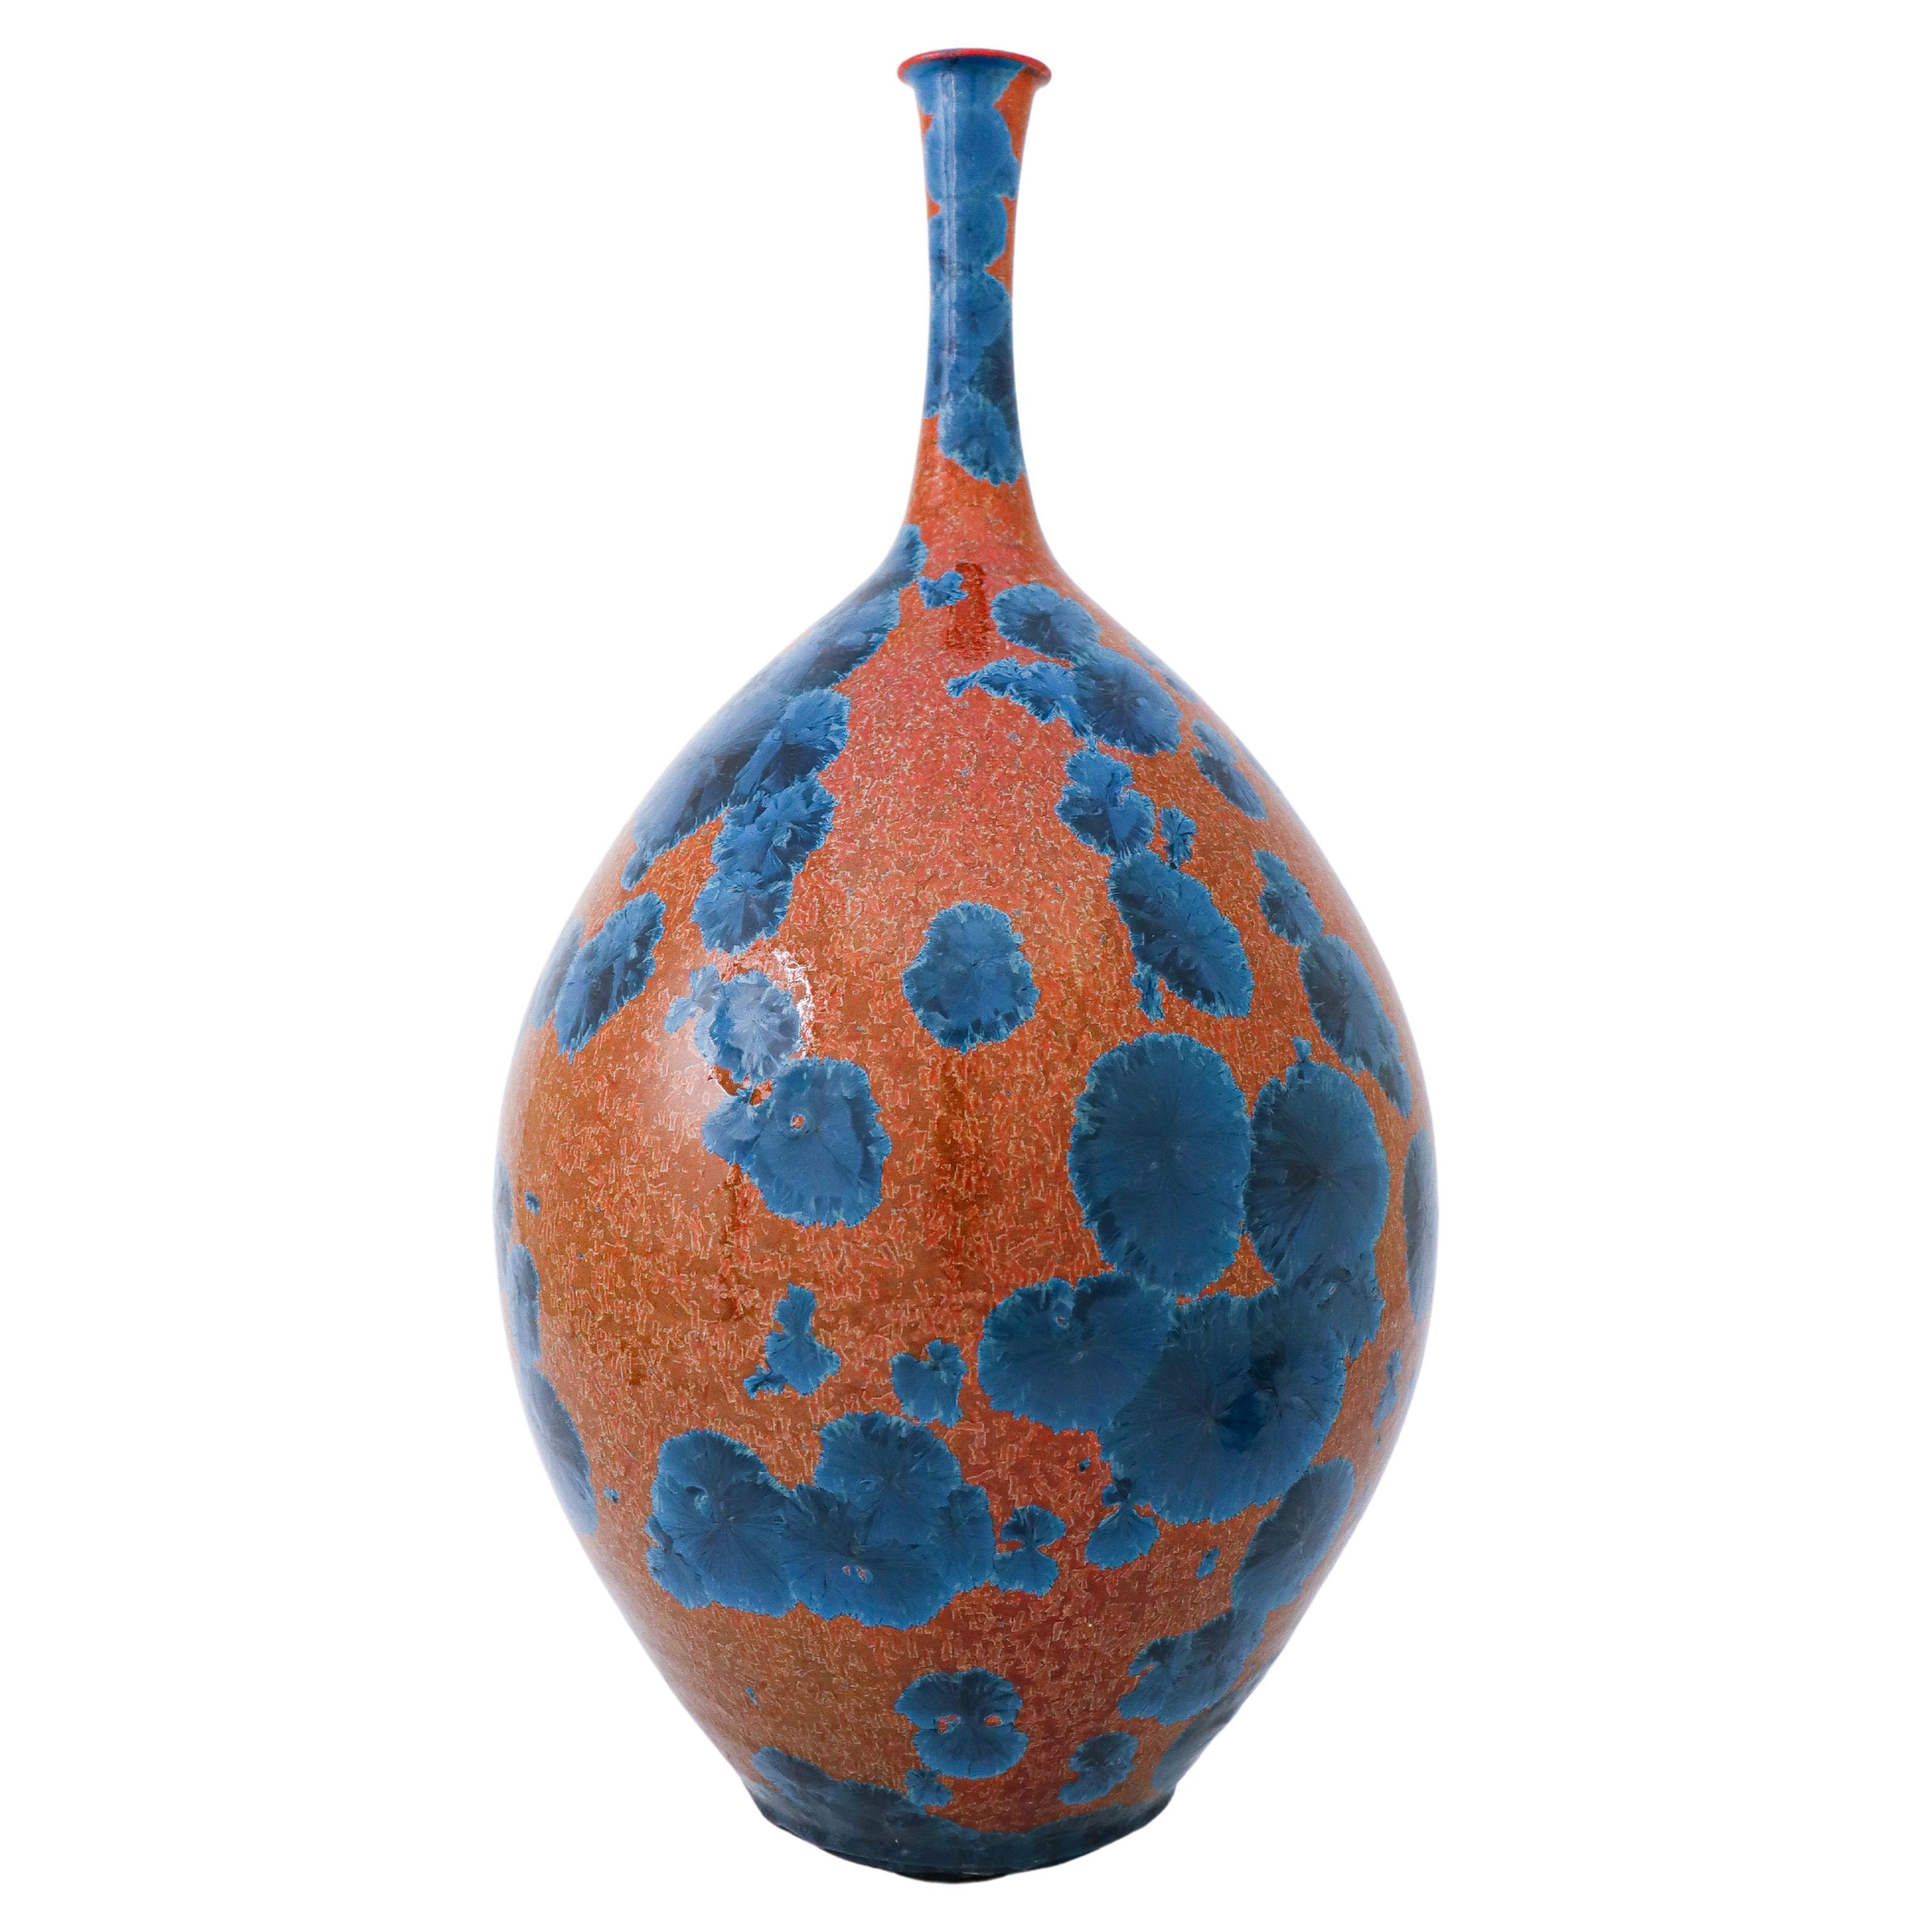 Vase Red & Blue Crystalline Glaze Isak Isaksson Contemporary Sweden Ceramic For Sale